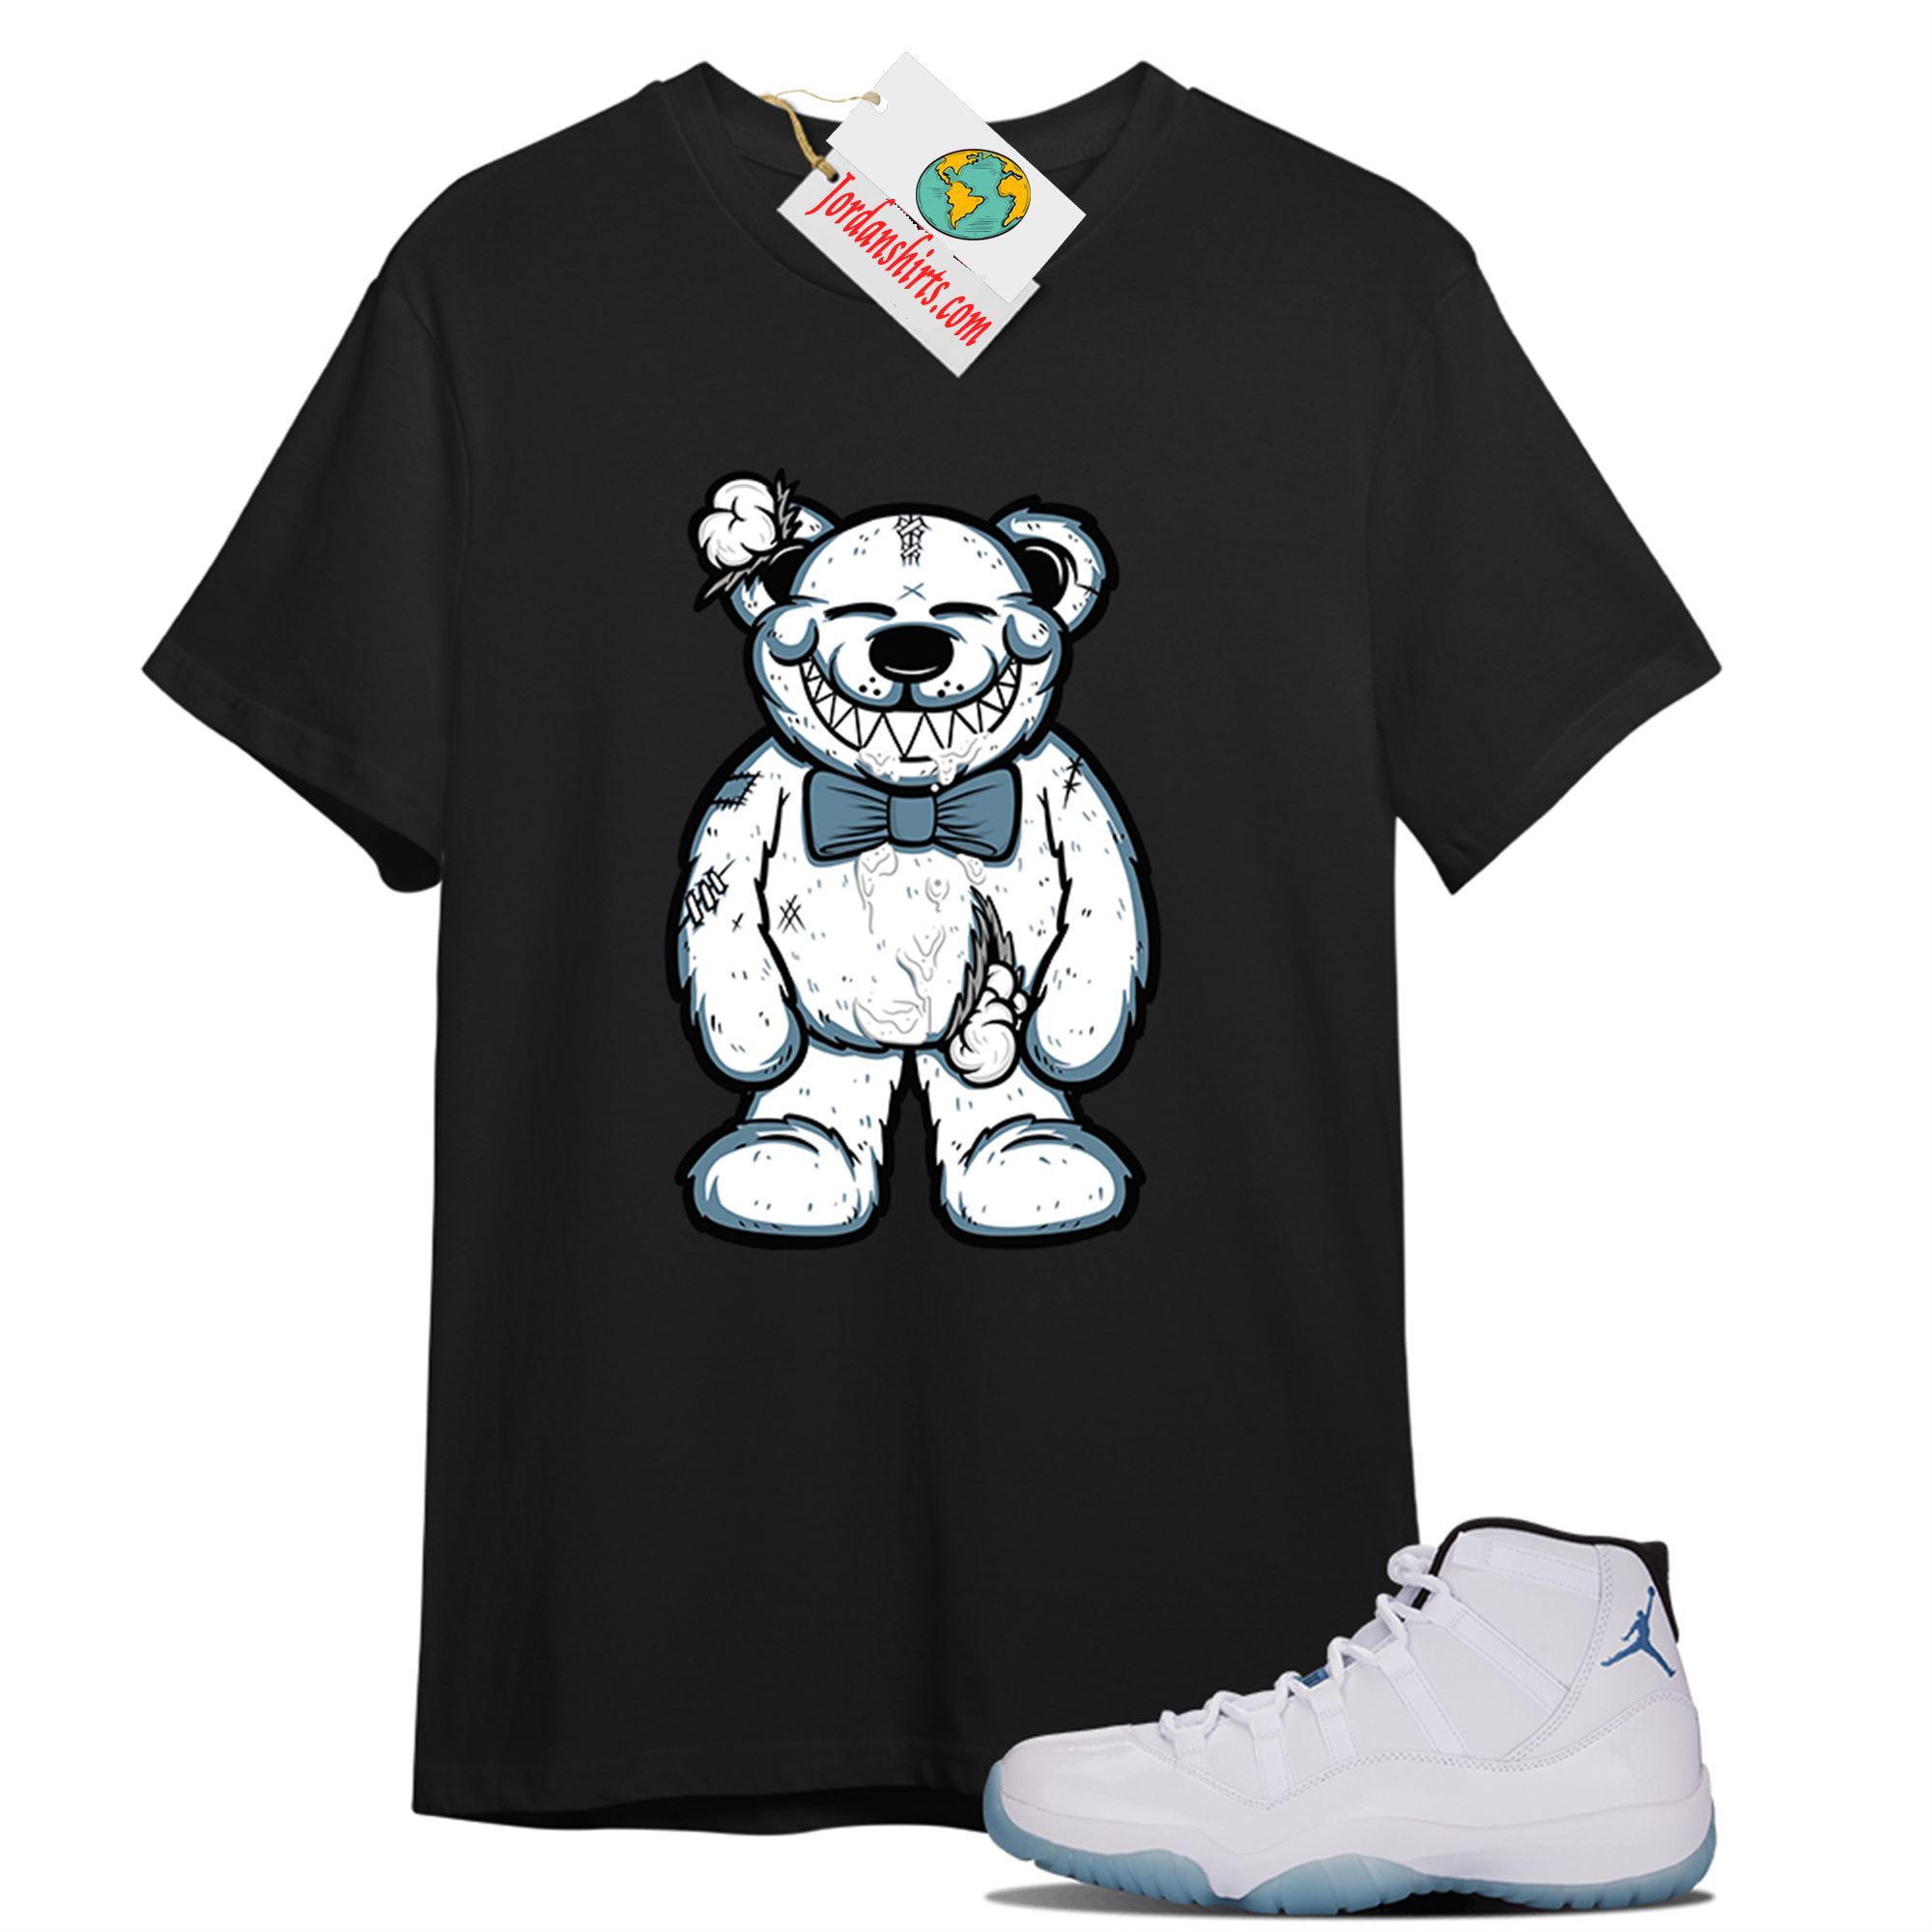 Jordan 11 Shirt, Teddy Bear Smile Black T-shirt Air Jordan 11 Legend Blue 11s Full Size Up To 5xl